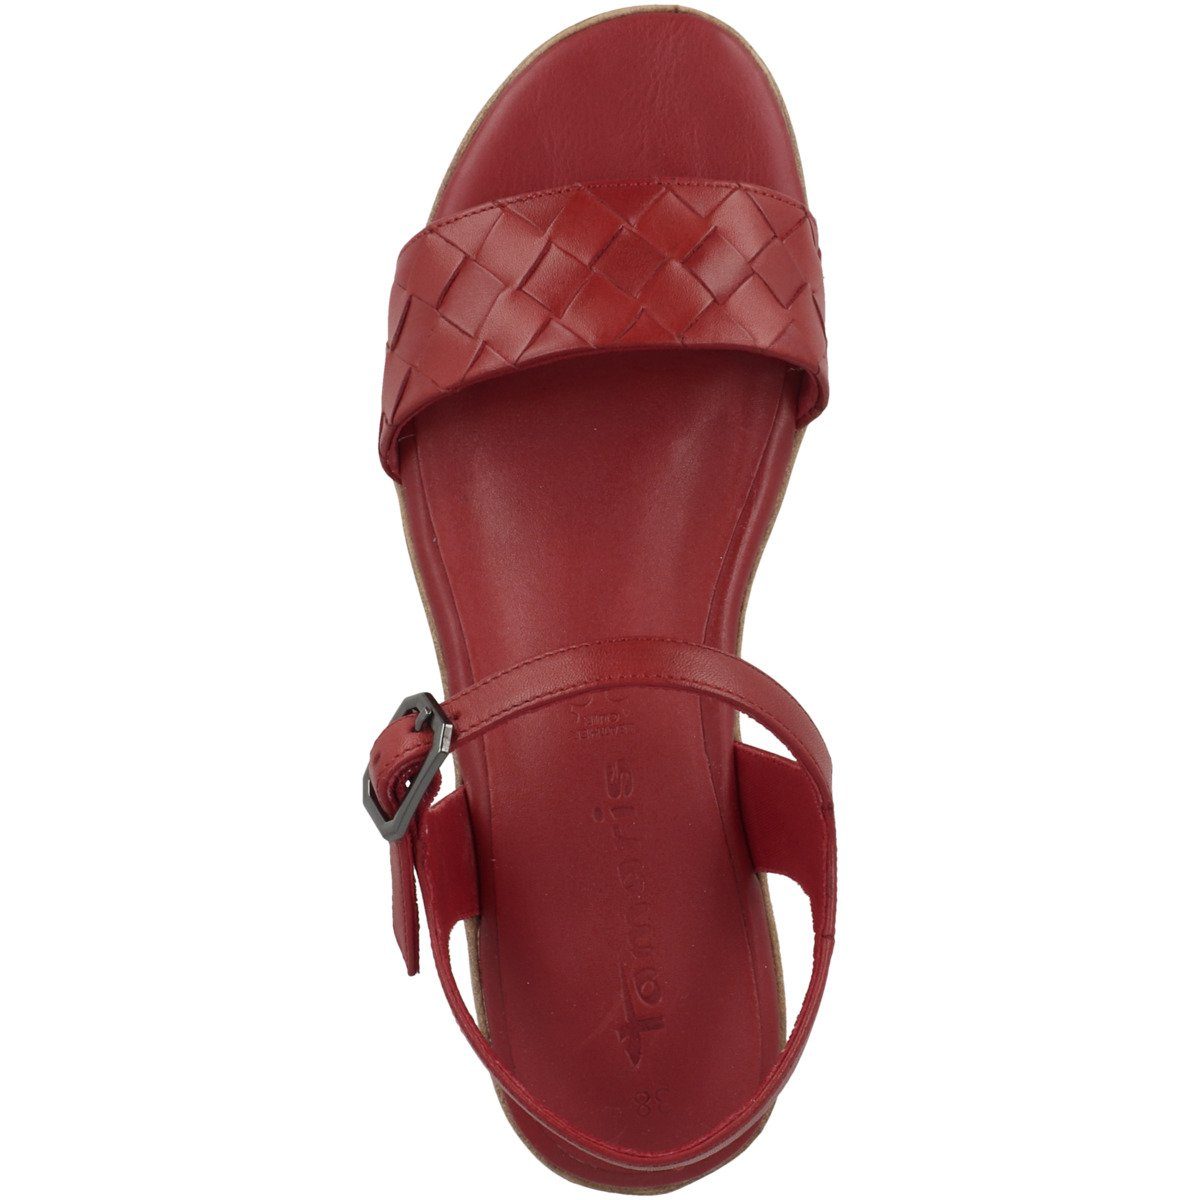 Tamaris 1-28216-20 Damen besonderen Sandale keine Merkmale rot